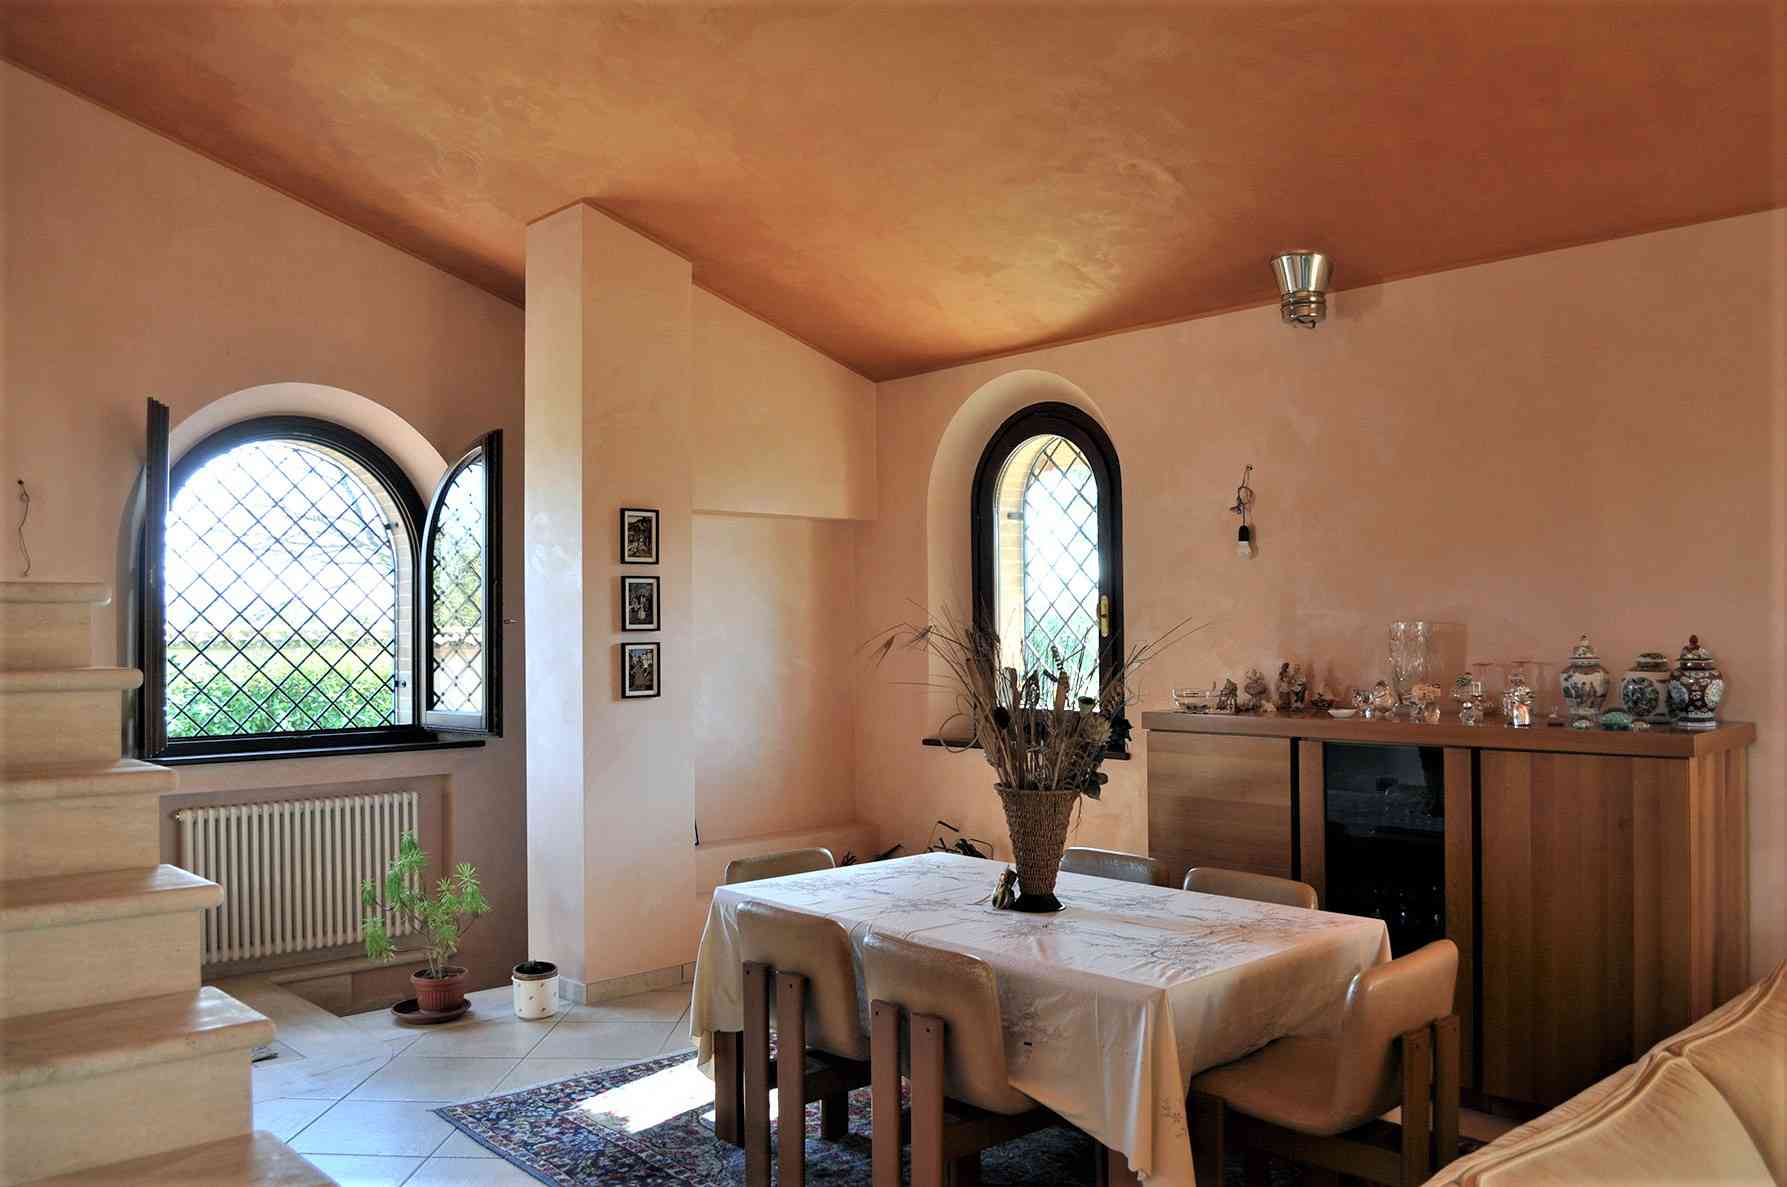 Villa Villa in vendita Tortoreto (TE), Villa Bianca - Tortoreto - EUR 567.877 620